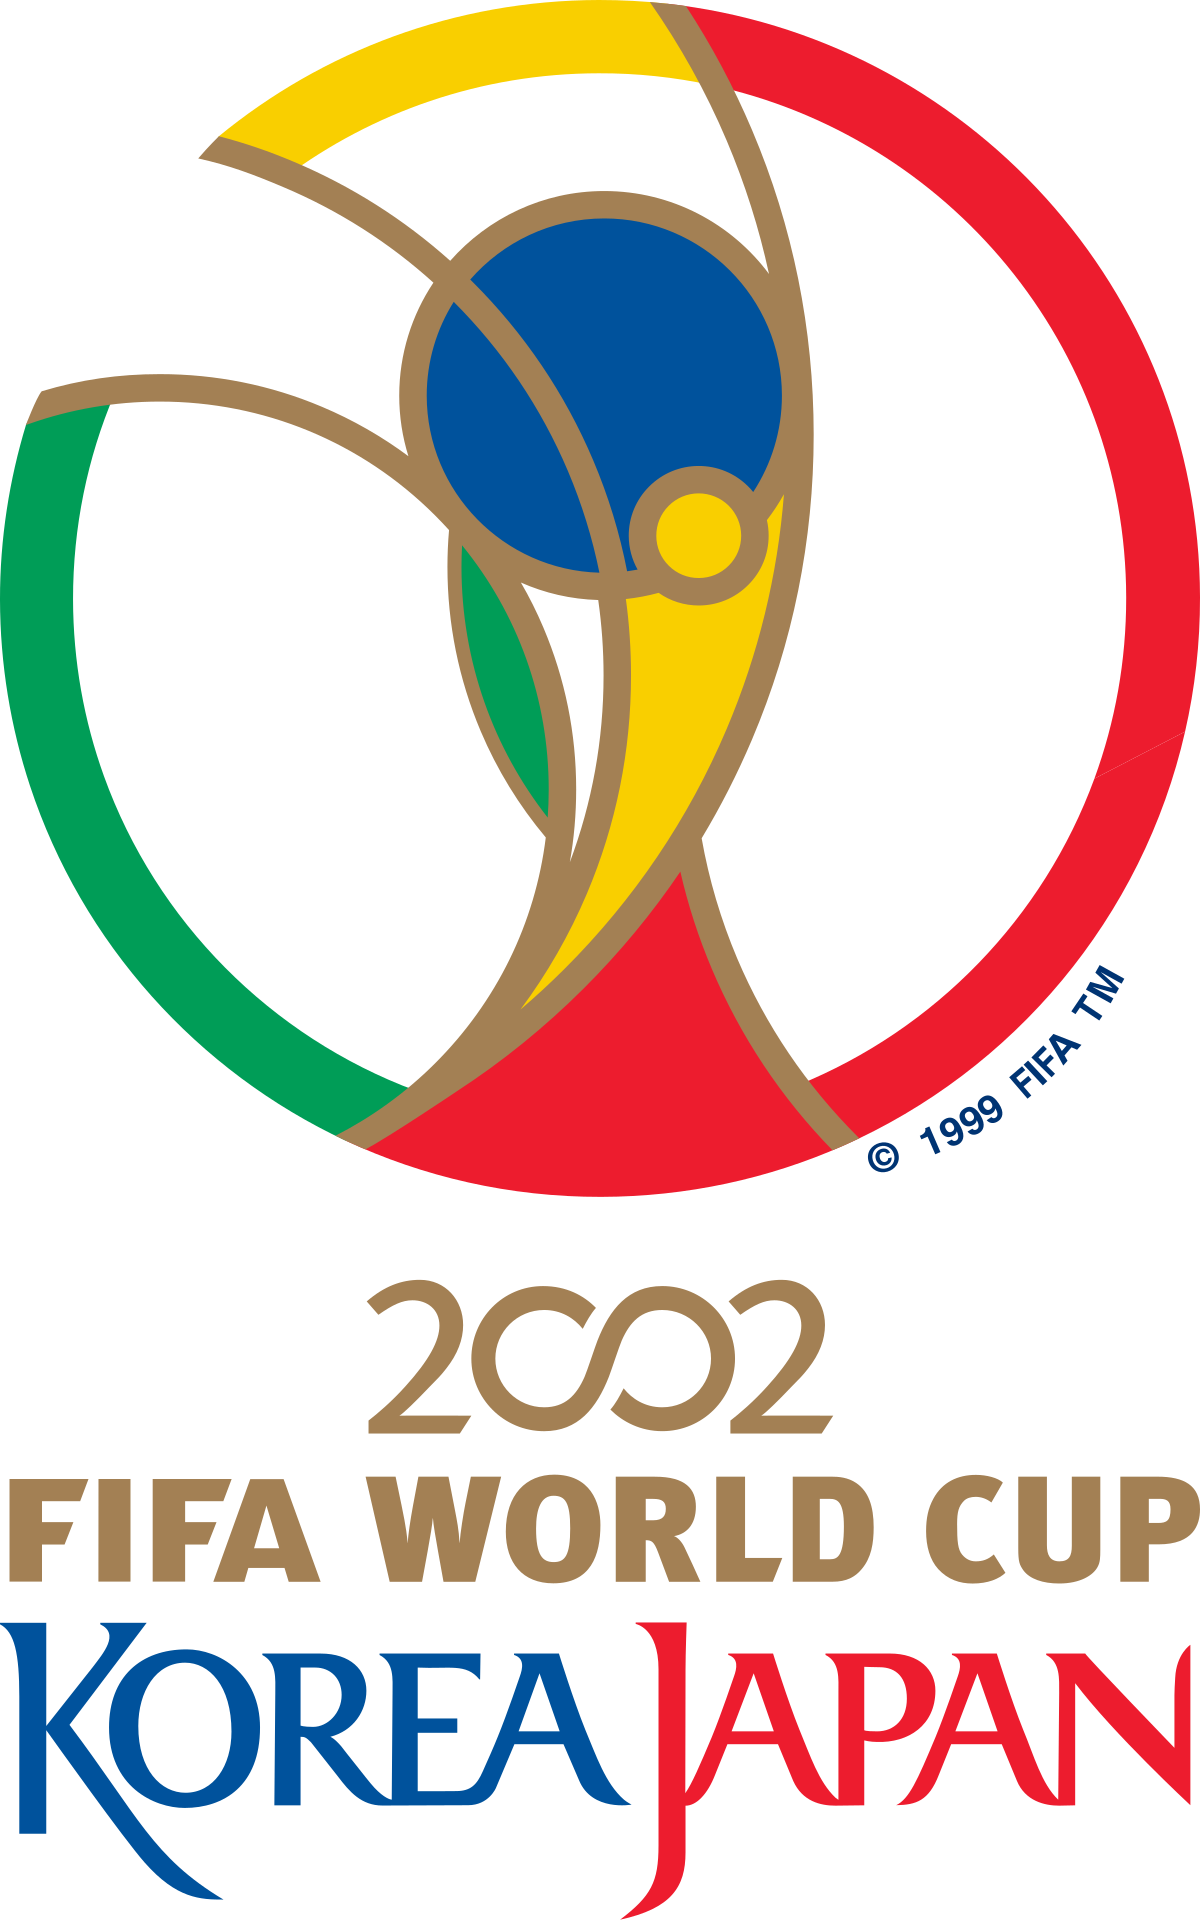 2002 F.I.F.A. World Cup Korea/Japan official logo